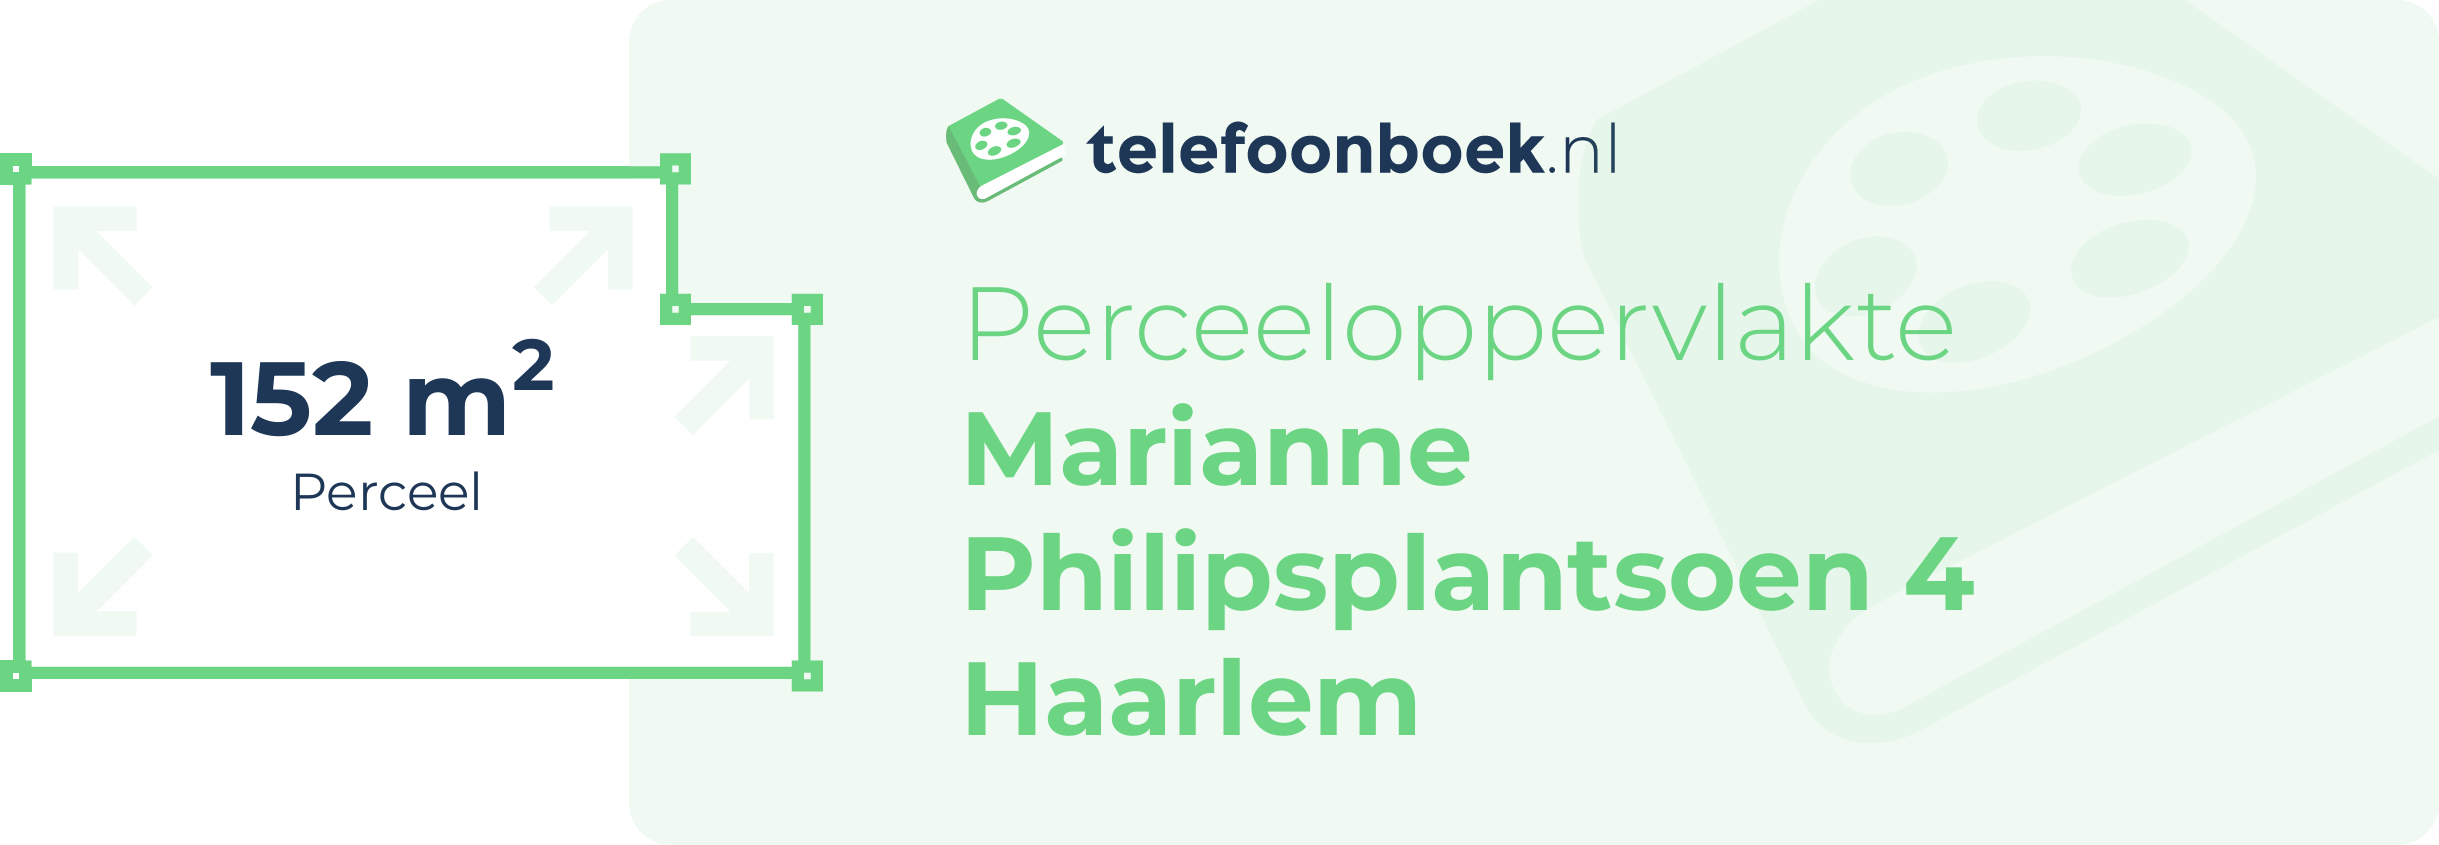 Perceeloppervlakte Marianne Philipsplantsoen 4 Haarlem